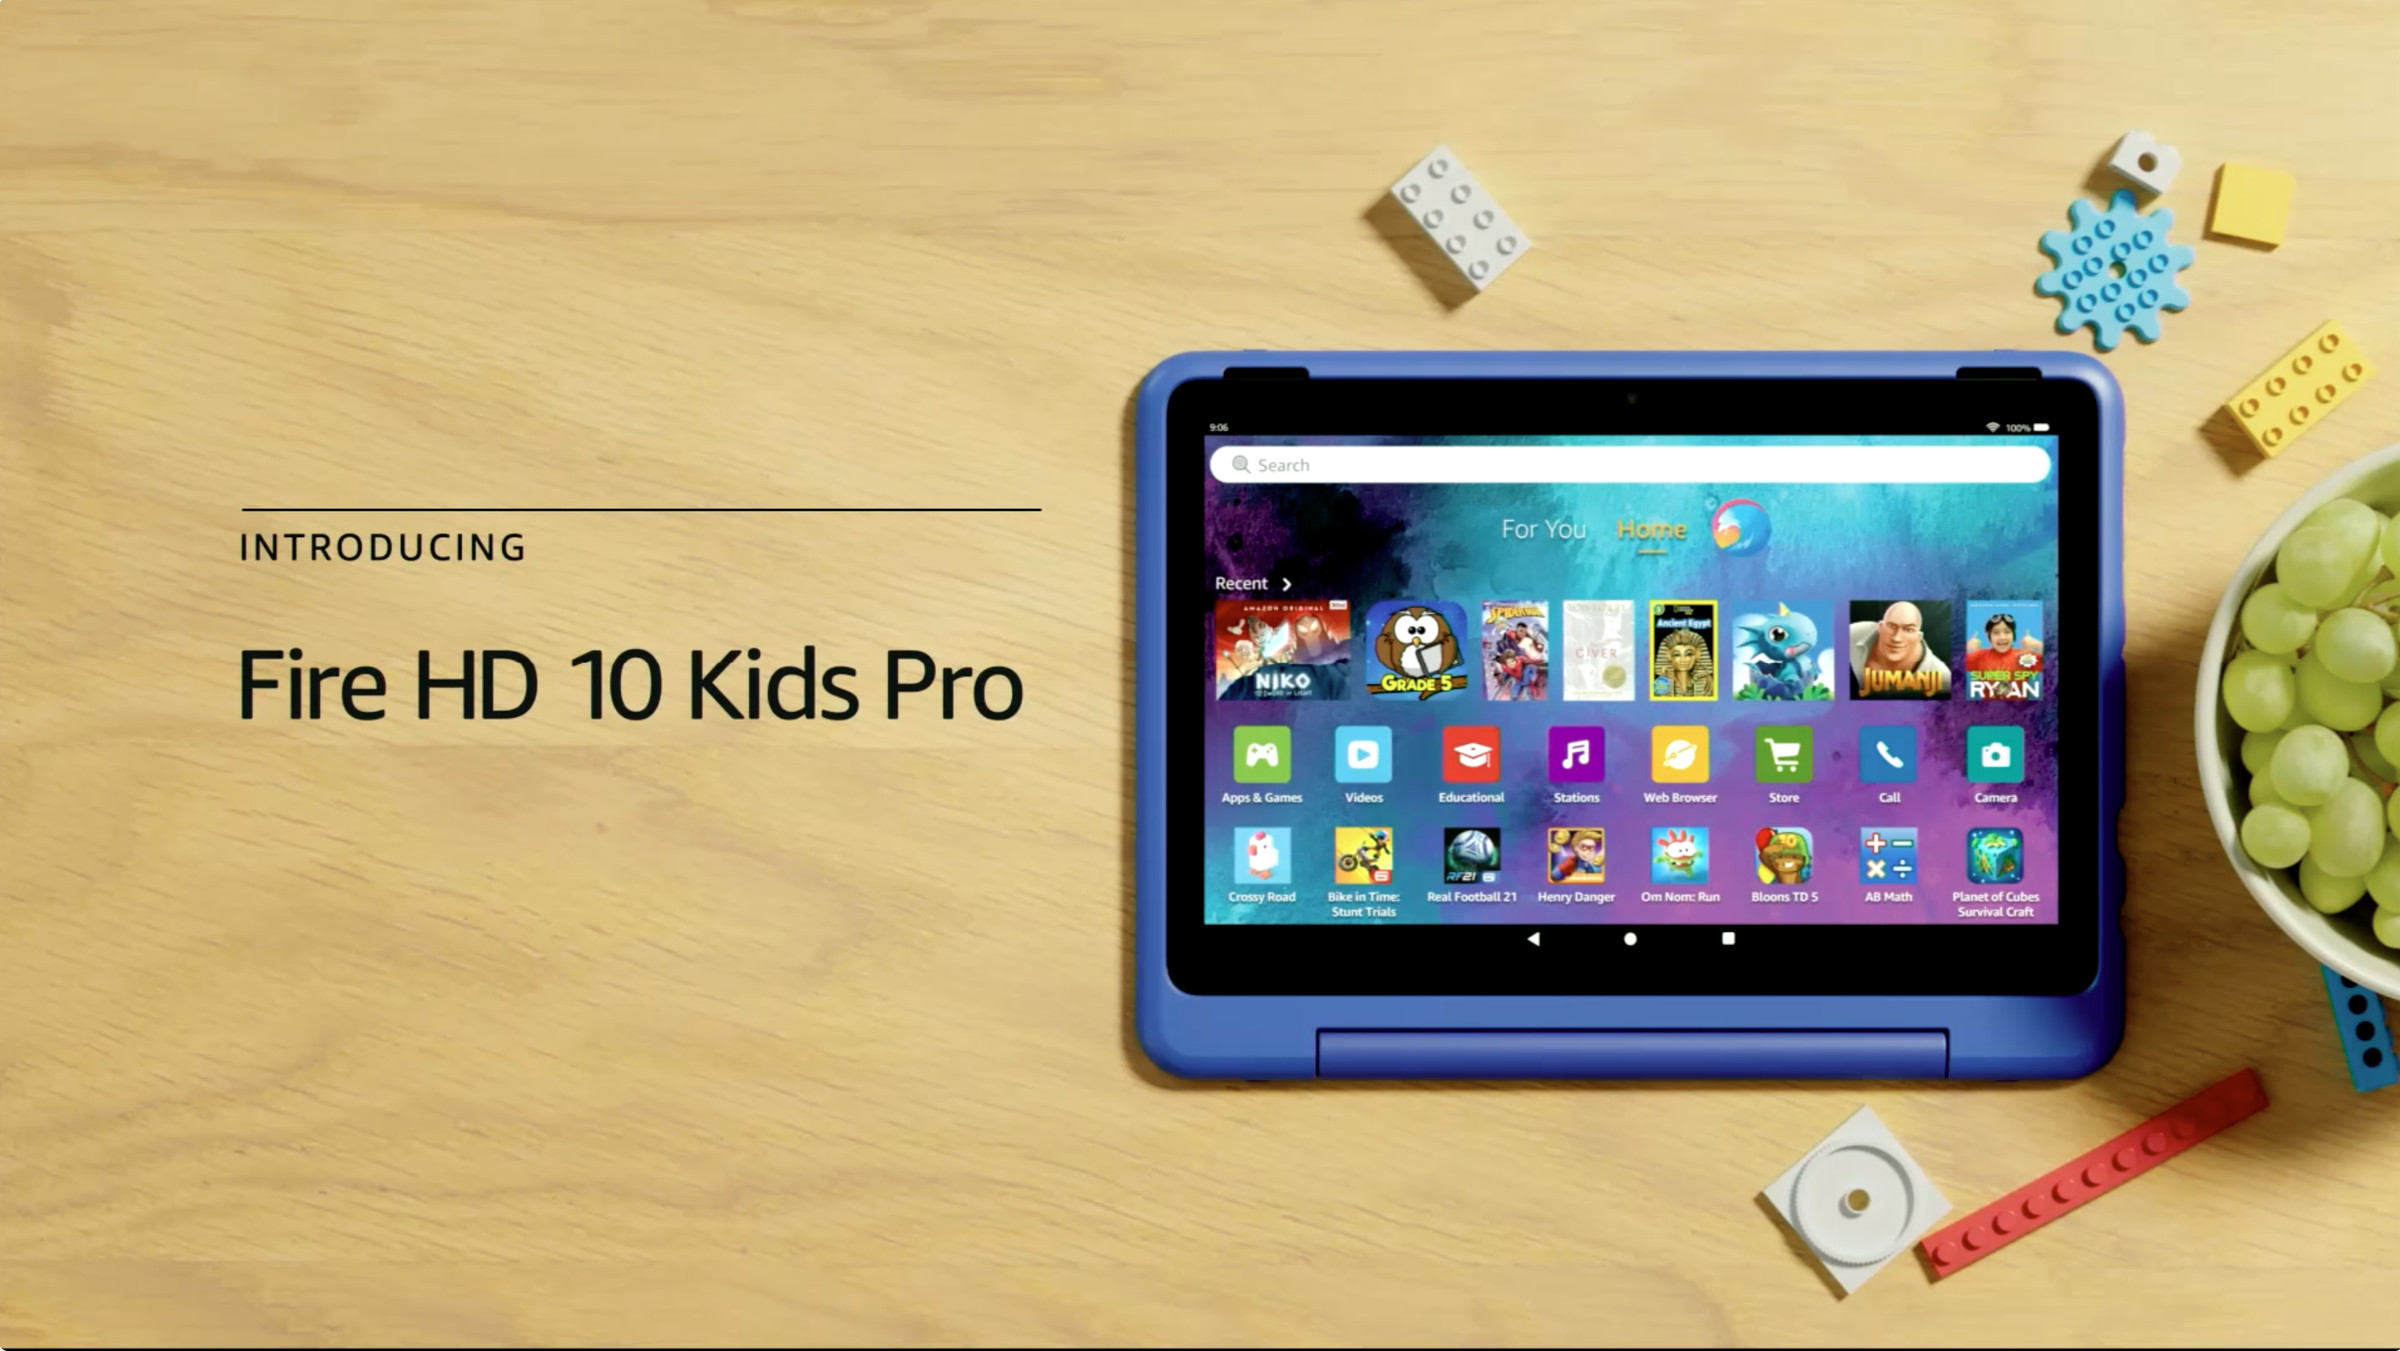 The new Fire HD 10 Kids Pro.